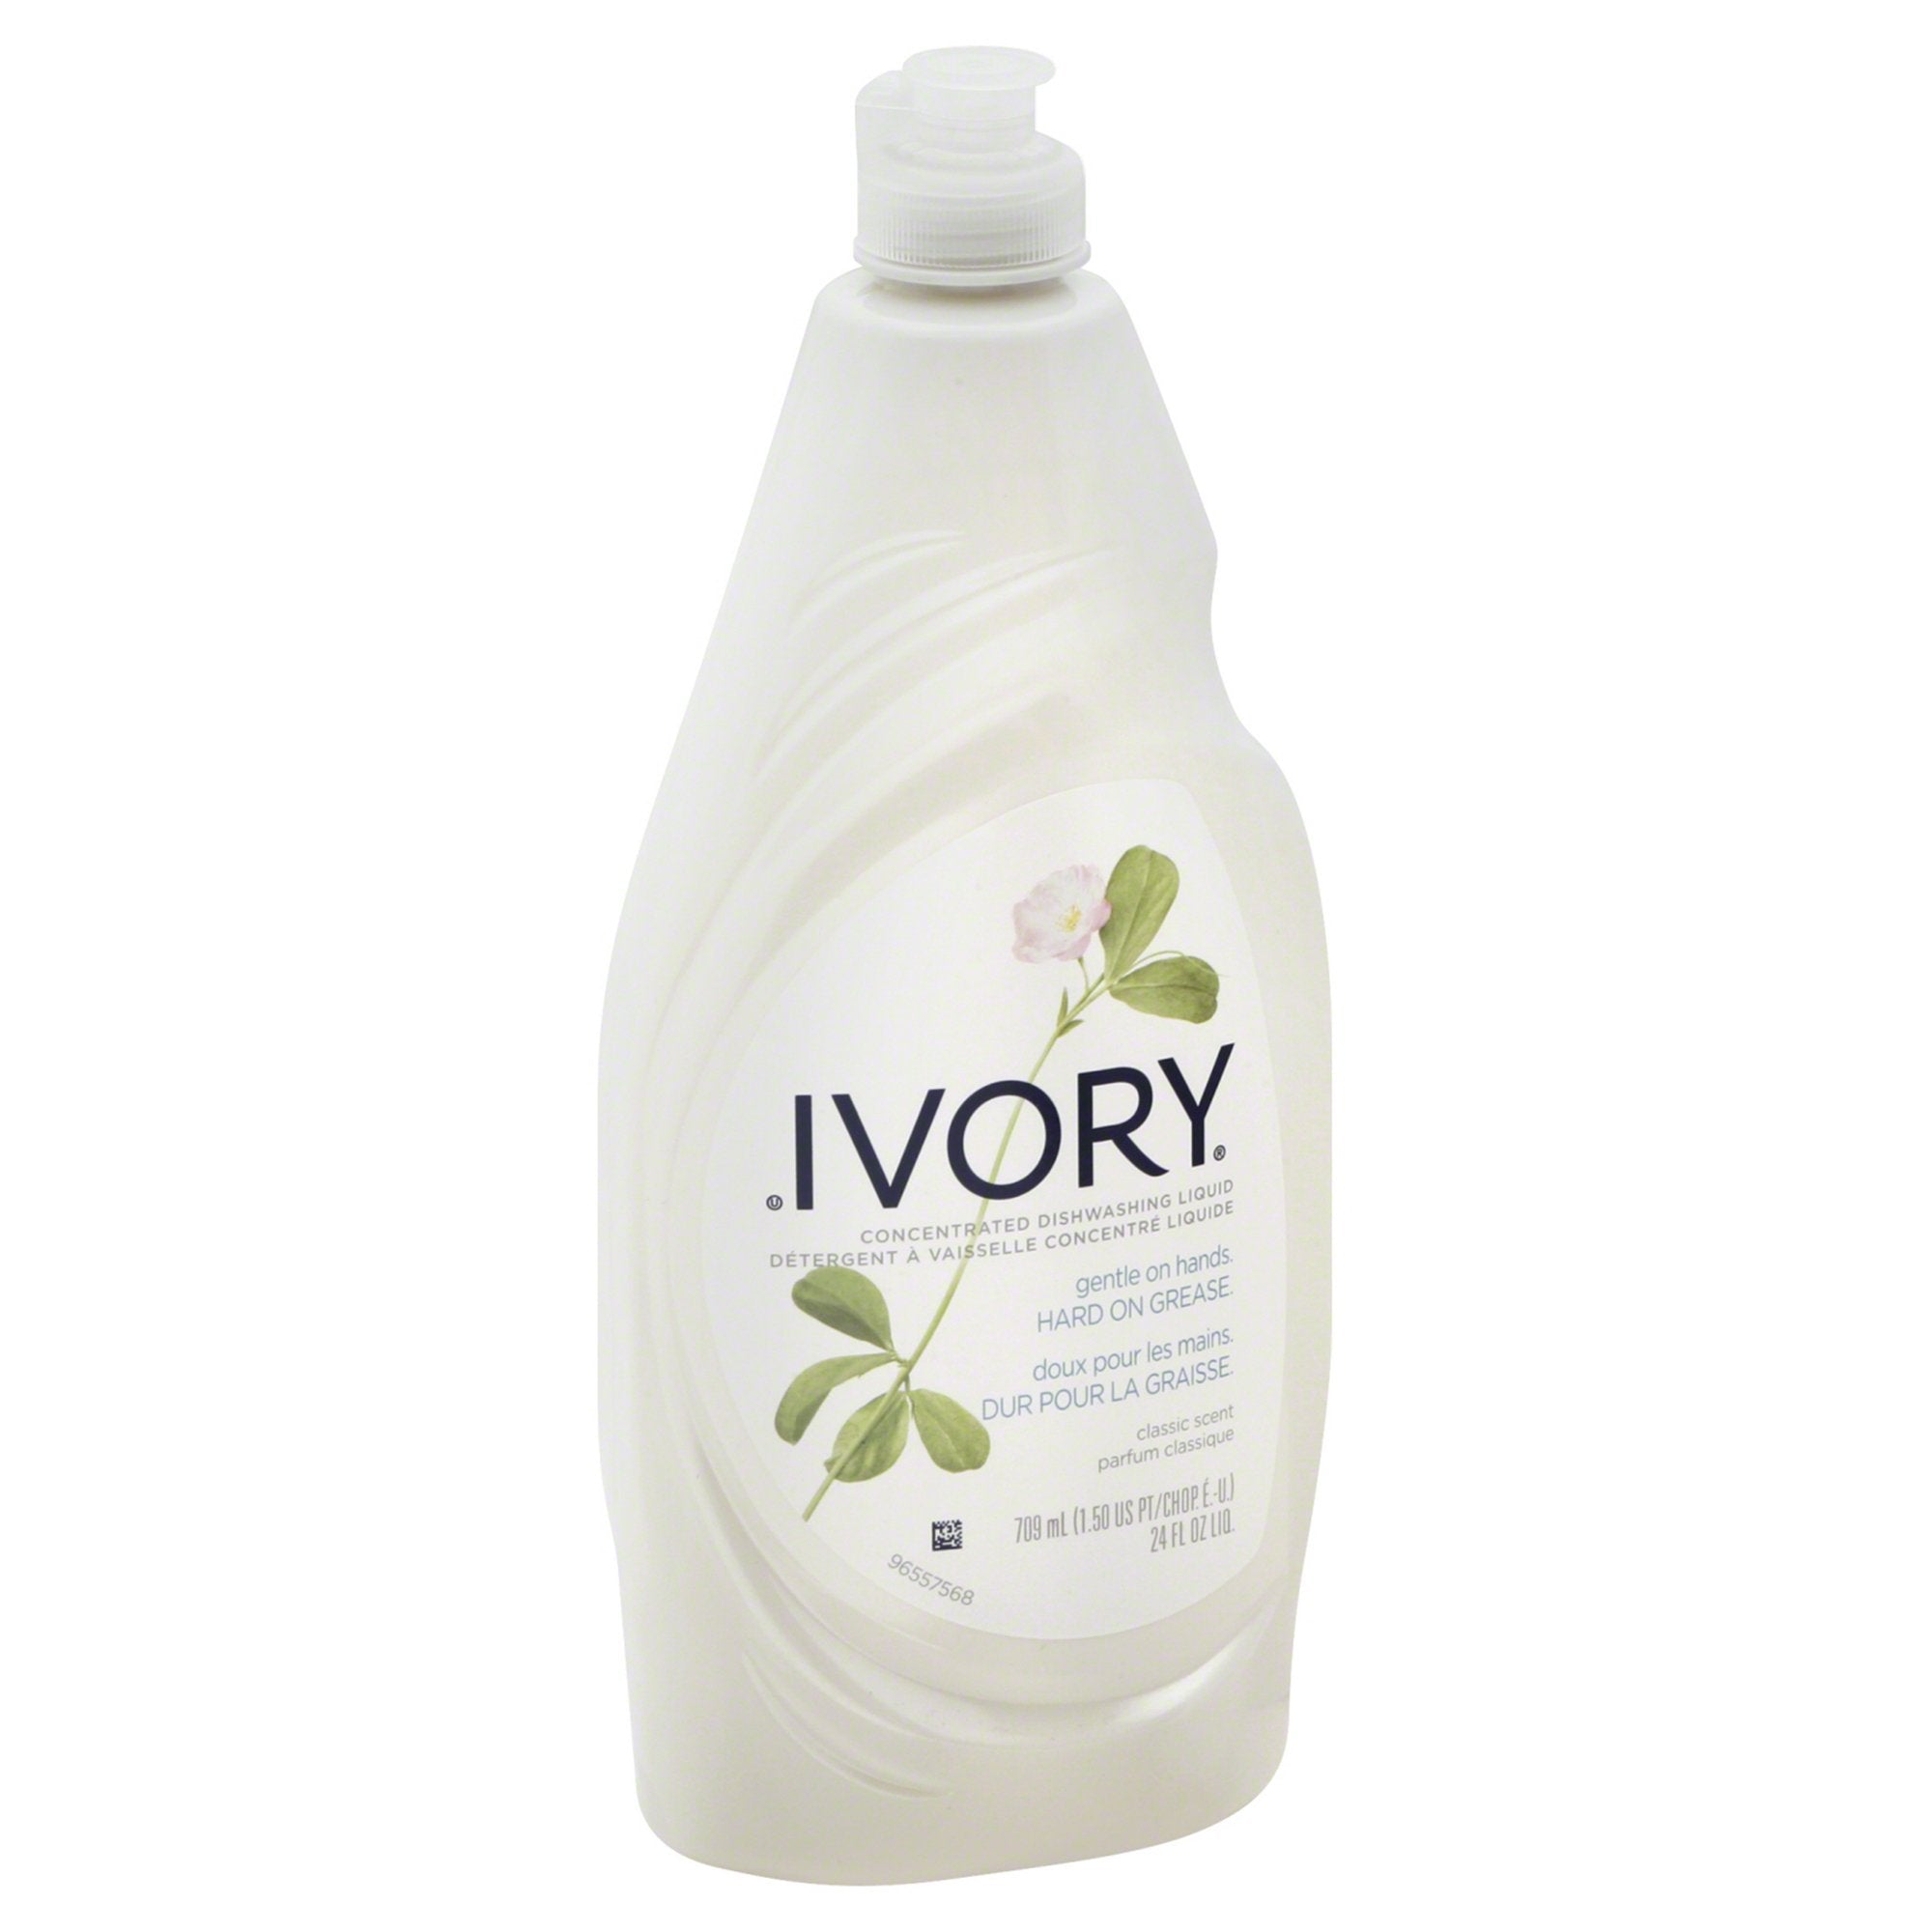 Dish Detergent Ivory 24 oz. Bottle Liquid Classic Scent